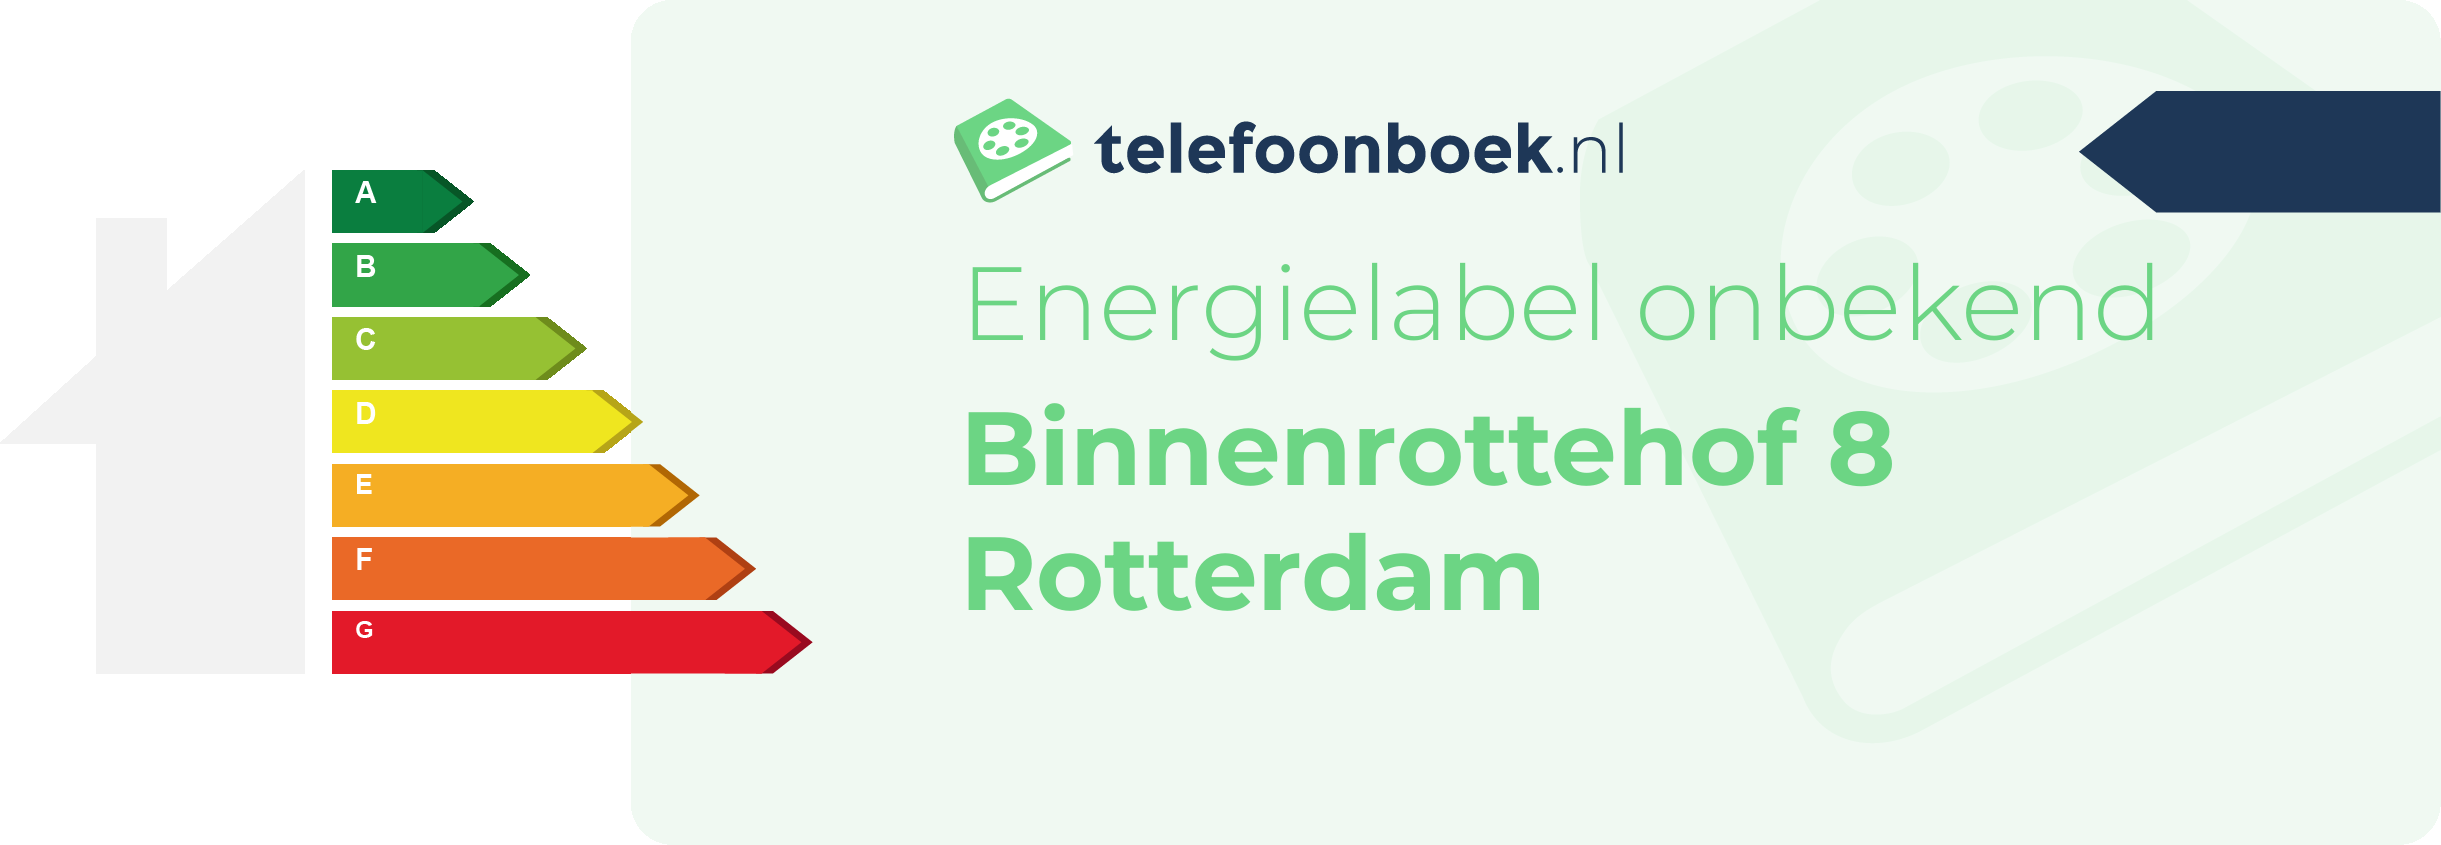 Energielabel Binnenrottehof 8 Rotterdam